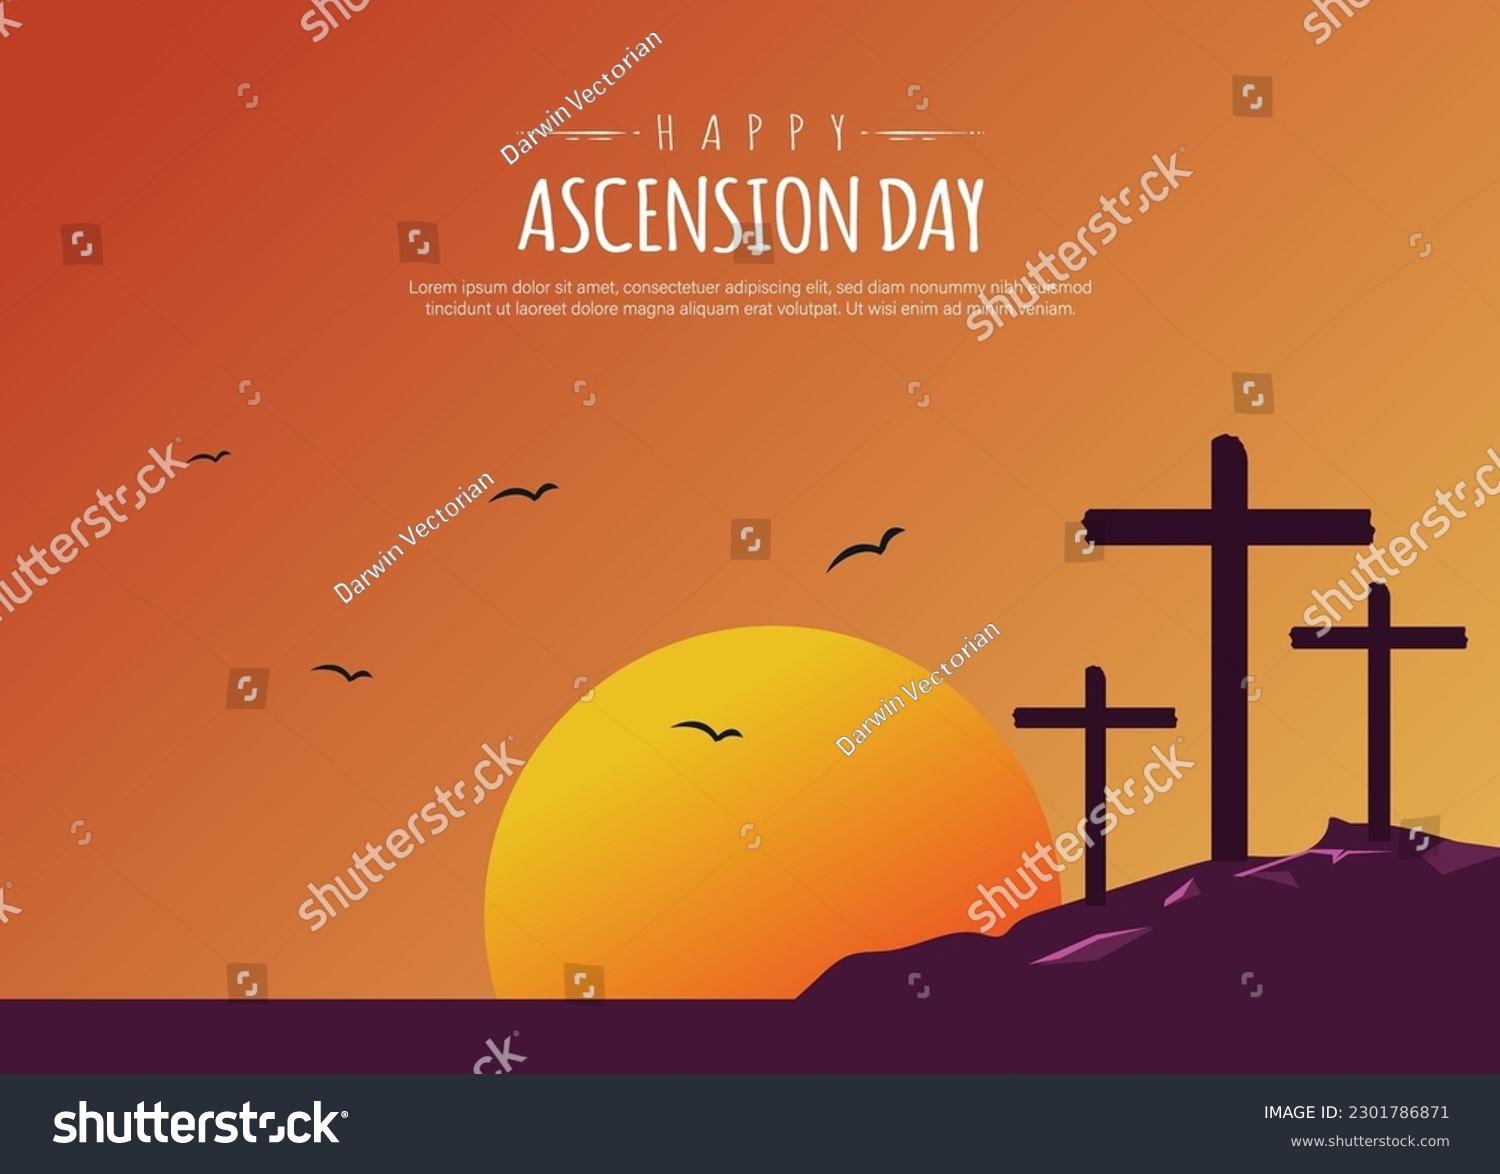 SVG of Happy Ascension Day Design with Jesus Christ in Heaven Vector Illustration.  Illustration of resurrection Jesus Christ. Sacrifice of Messiah for humanity redemption.  svg